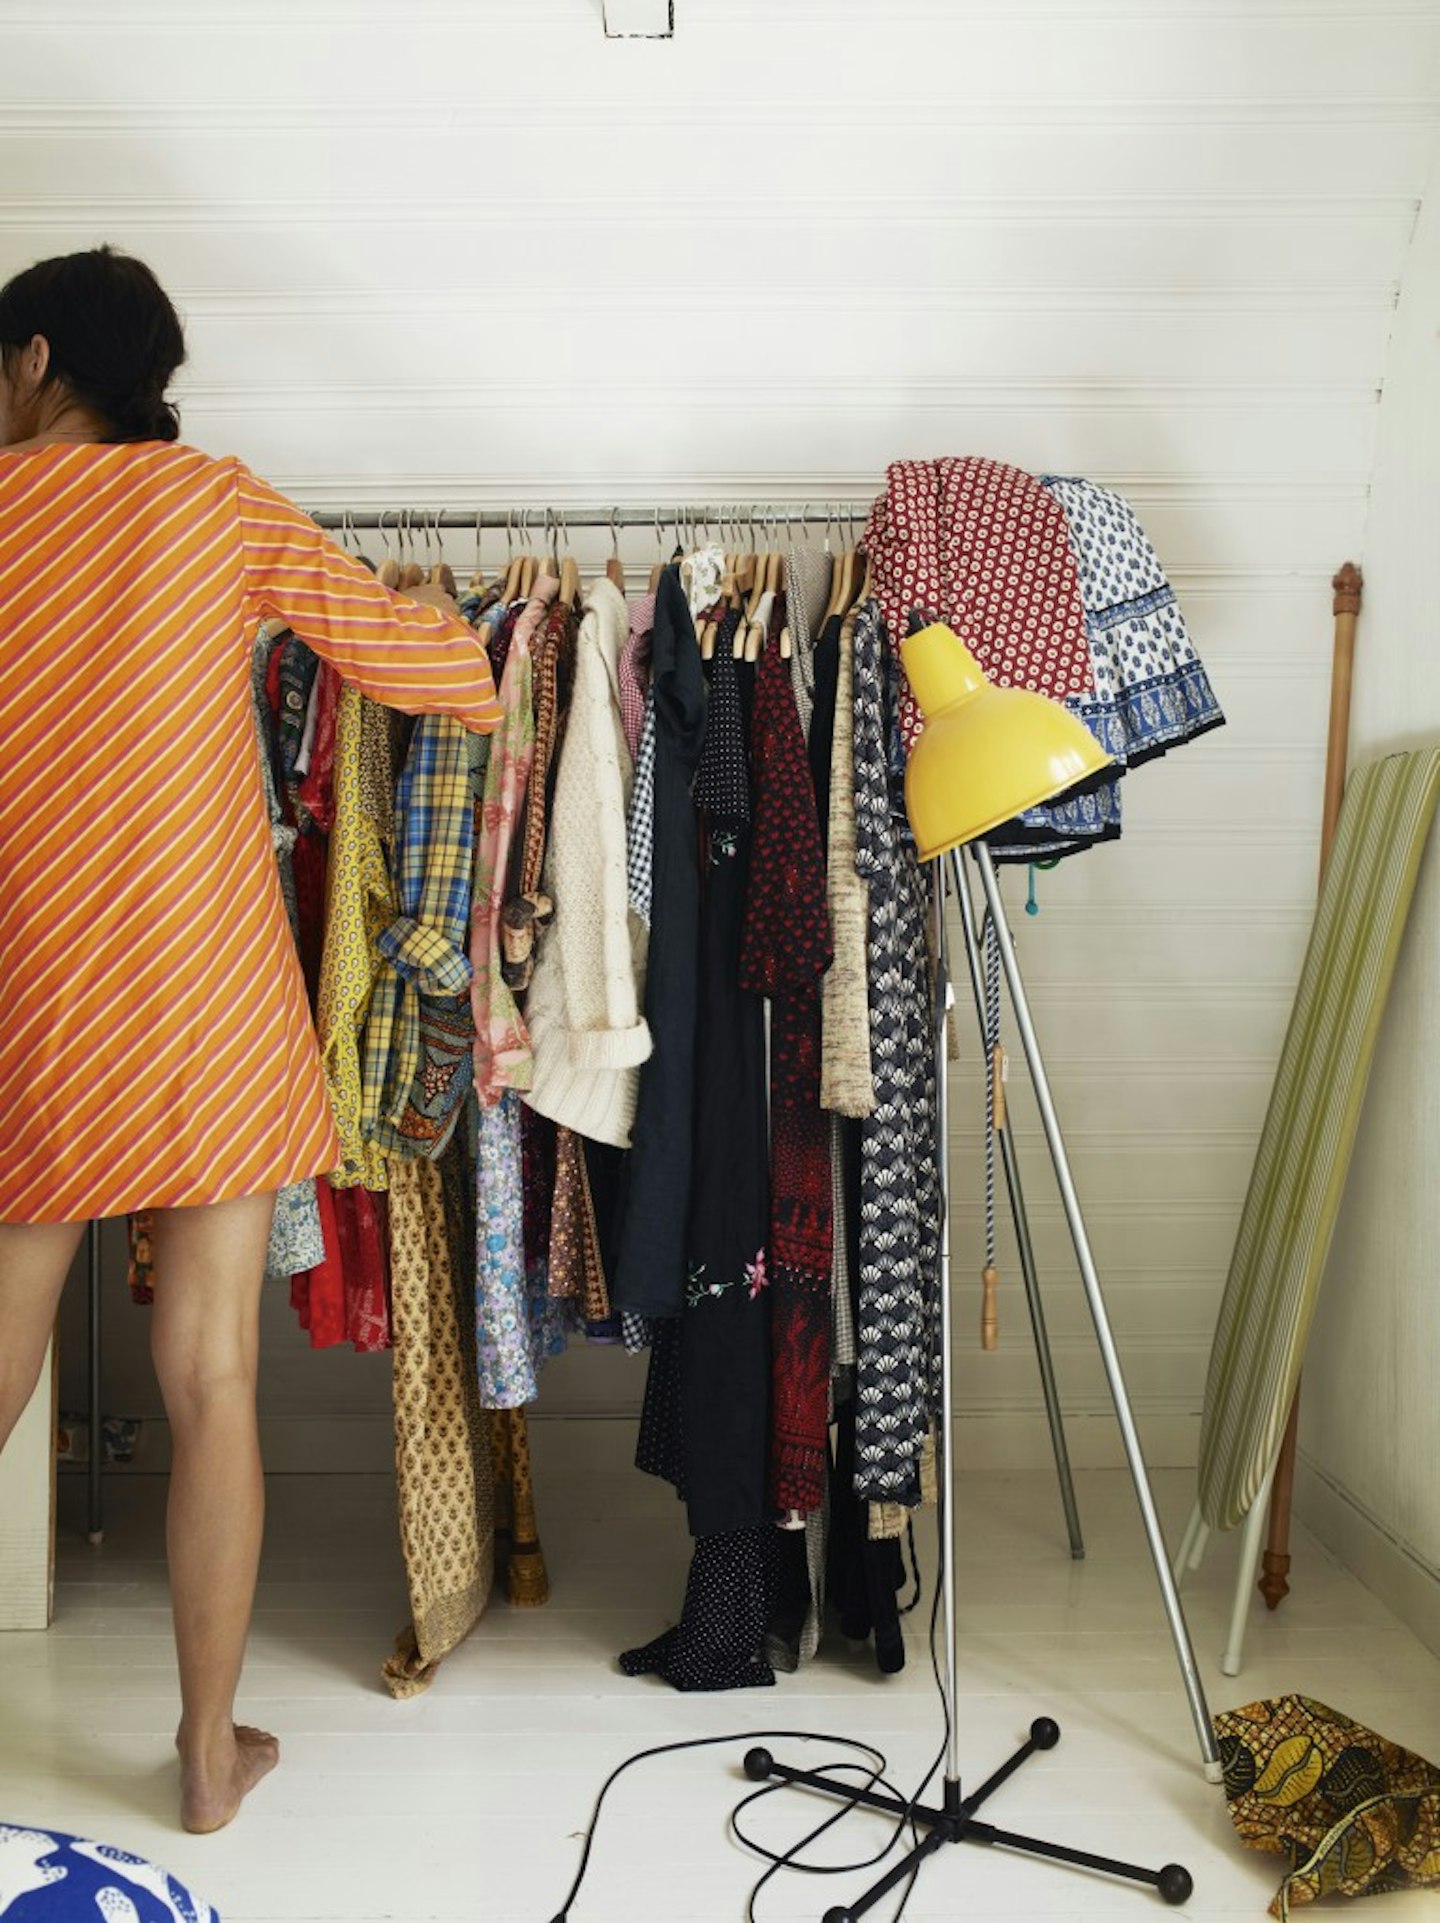 Get Fresh Work Wardrobe Ideas At This Fashion Masterclass